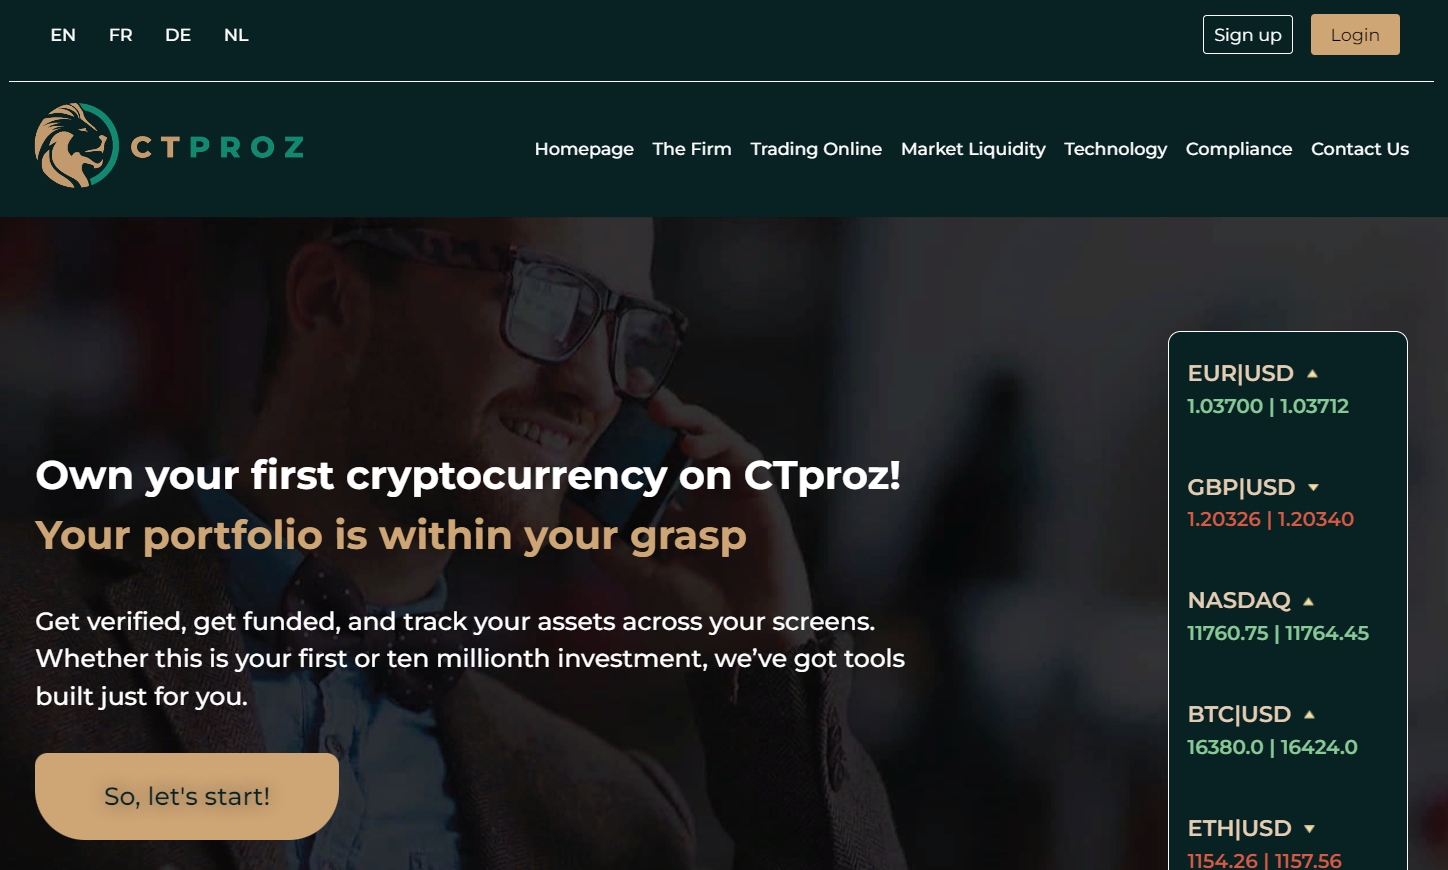 CTproz homepage